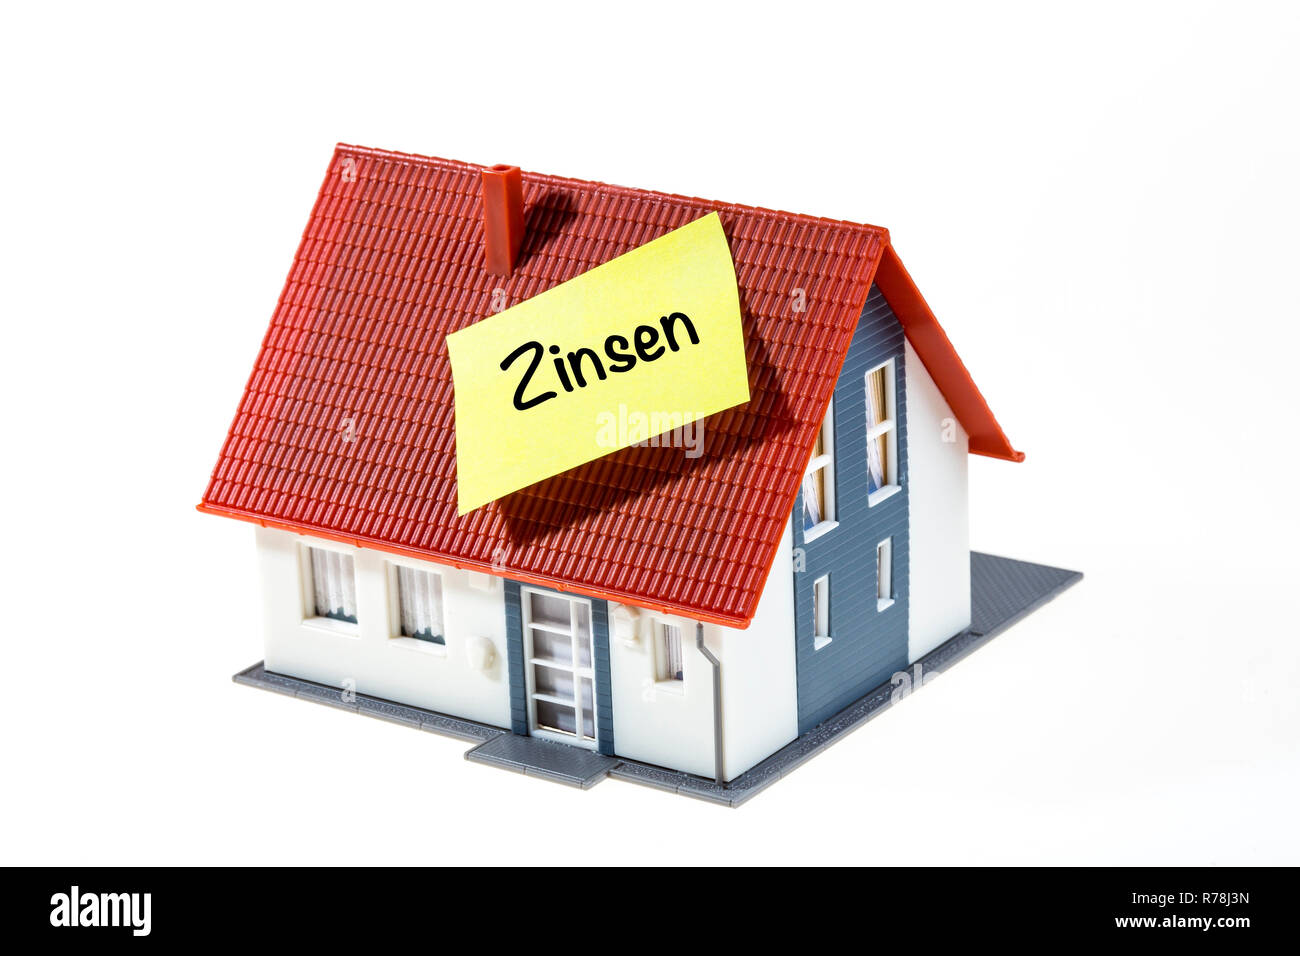 Real estate symbol, home financing interest, German language Stock Photo